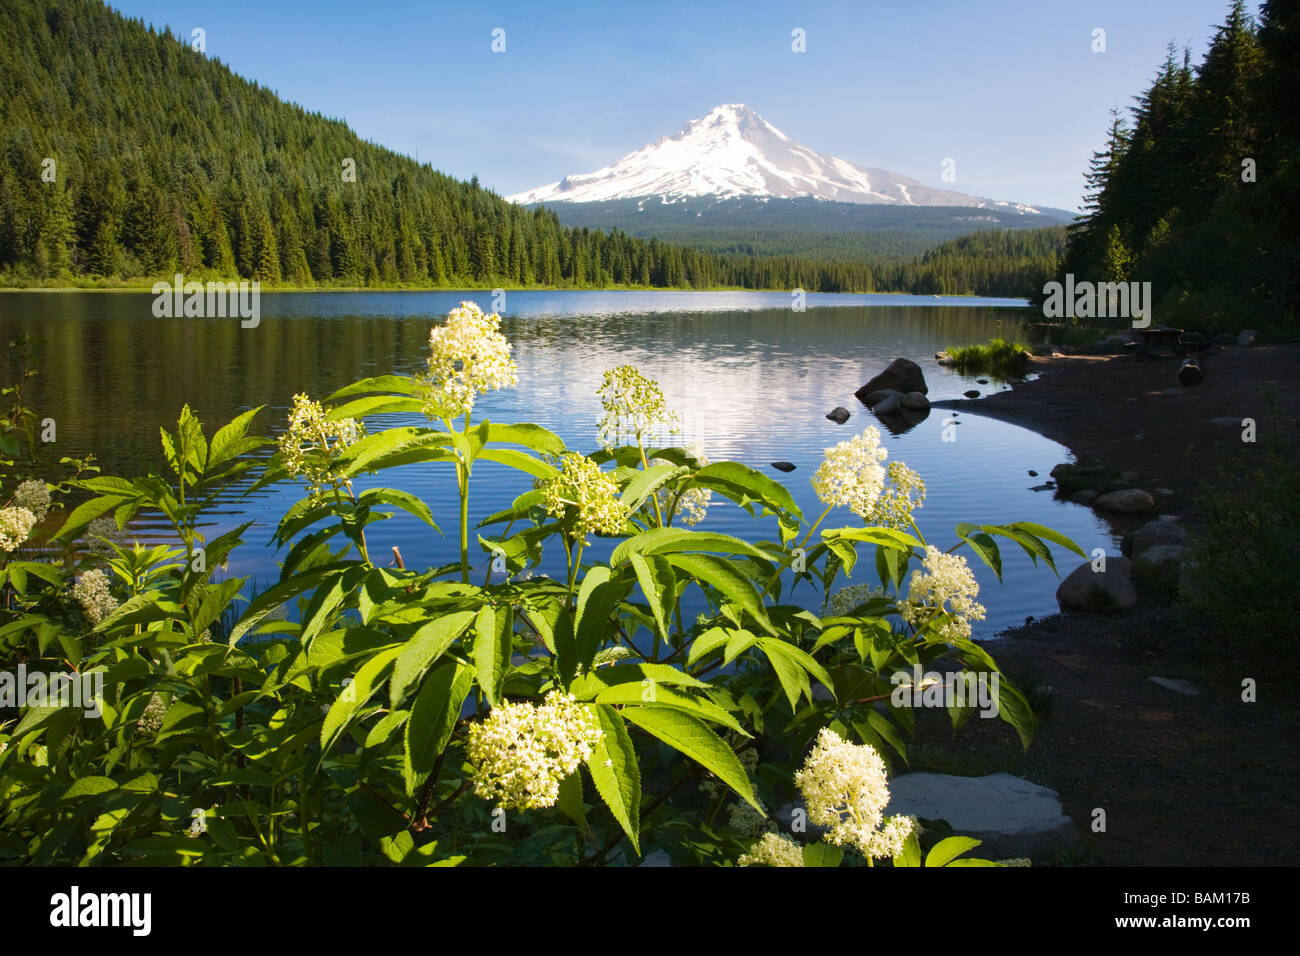 Mount hood and trillium lake Stock Photo